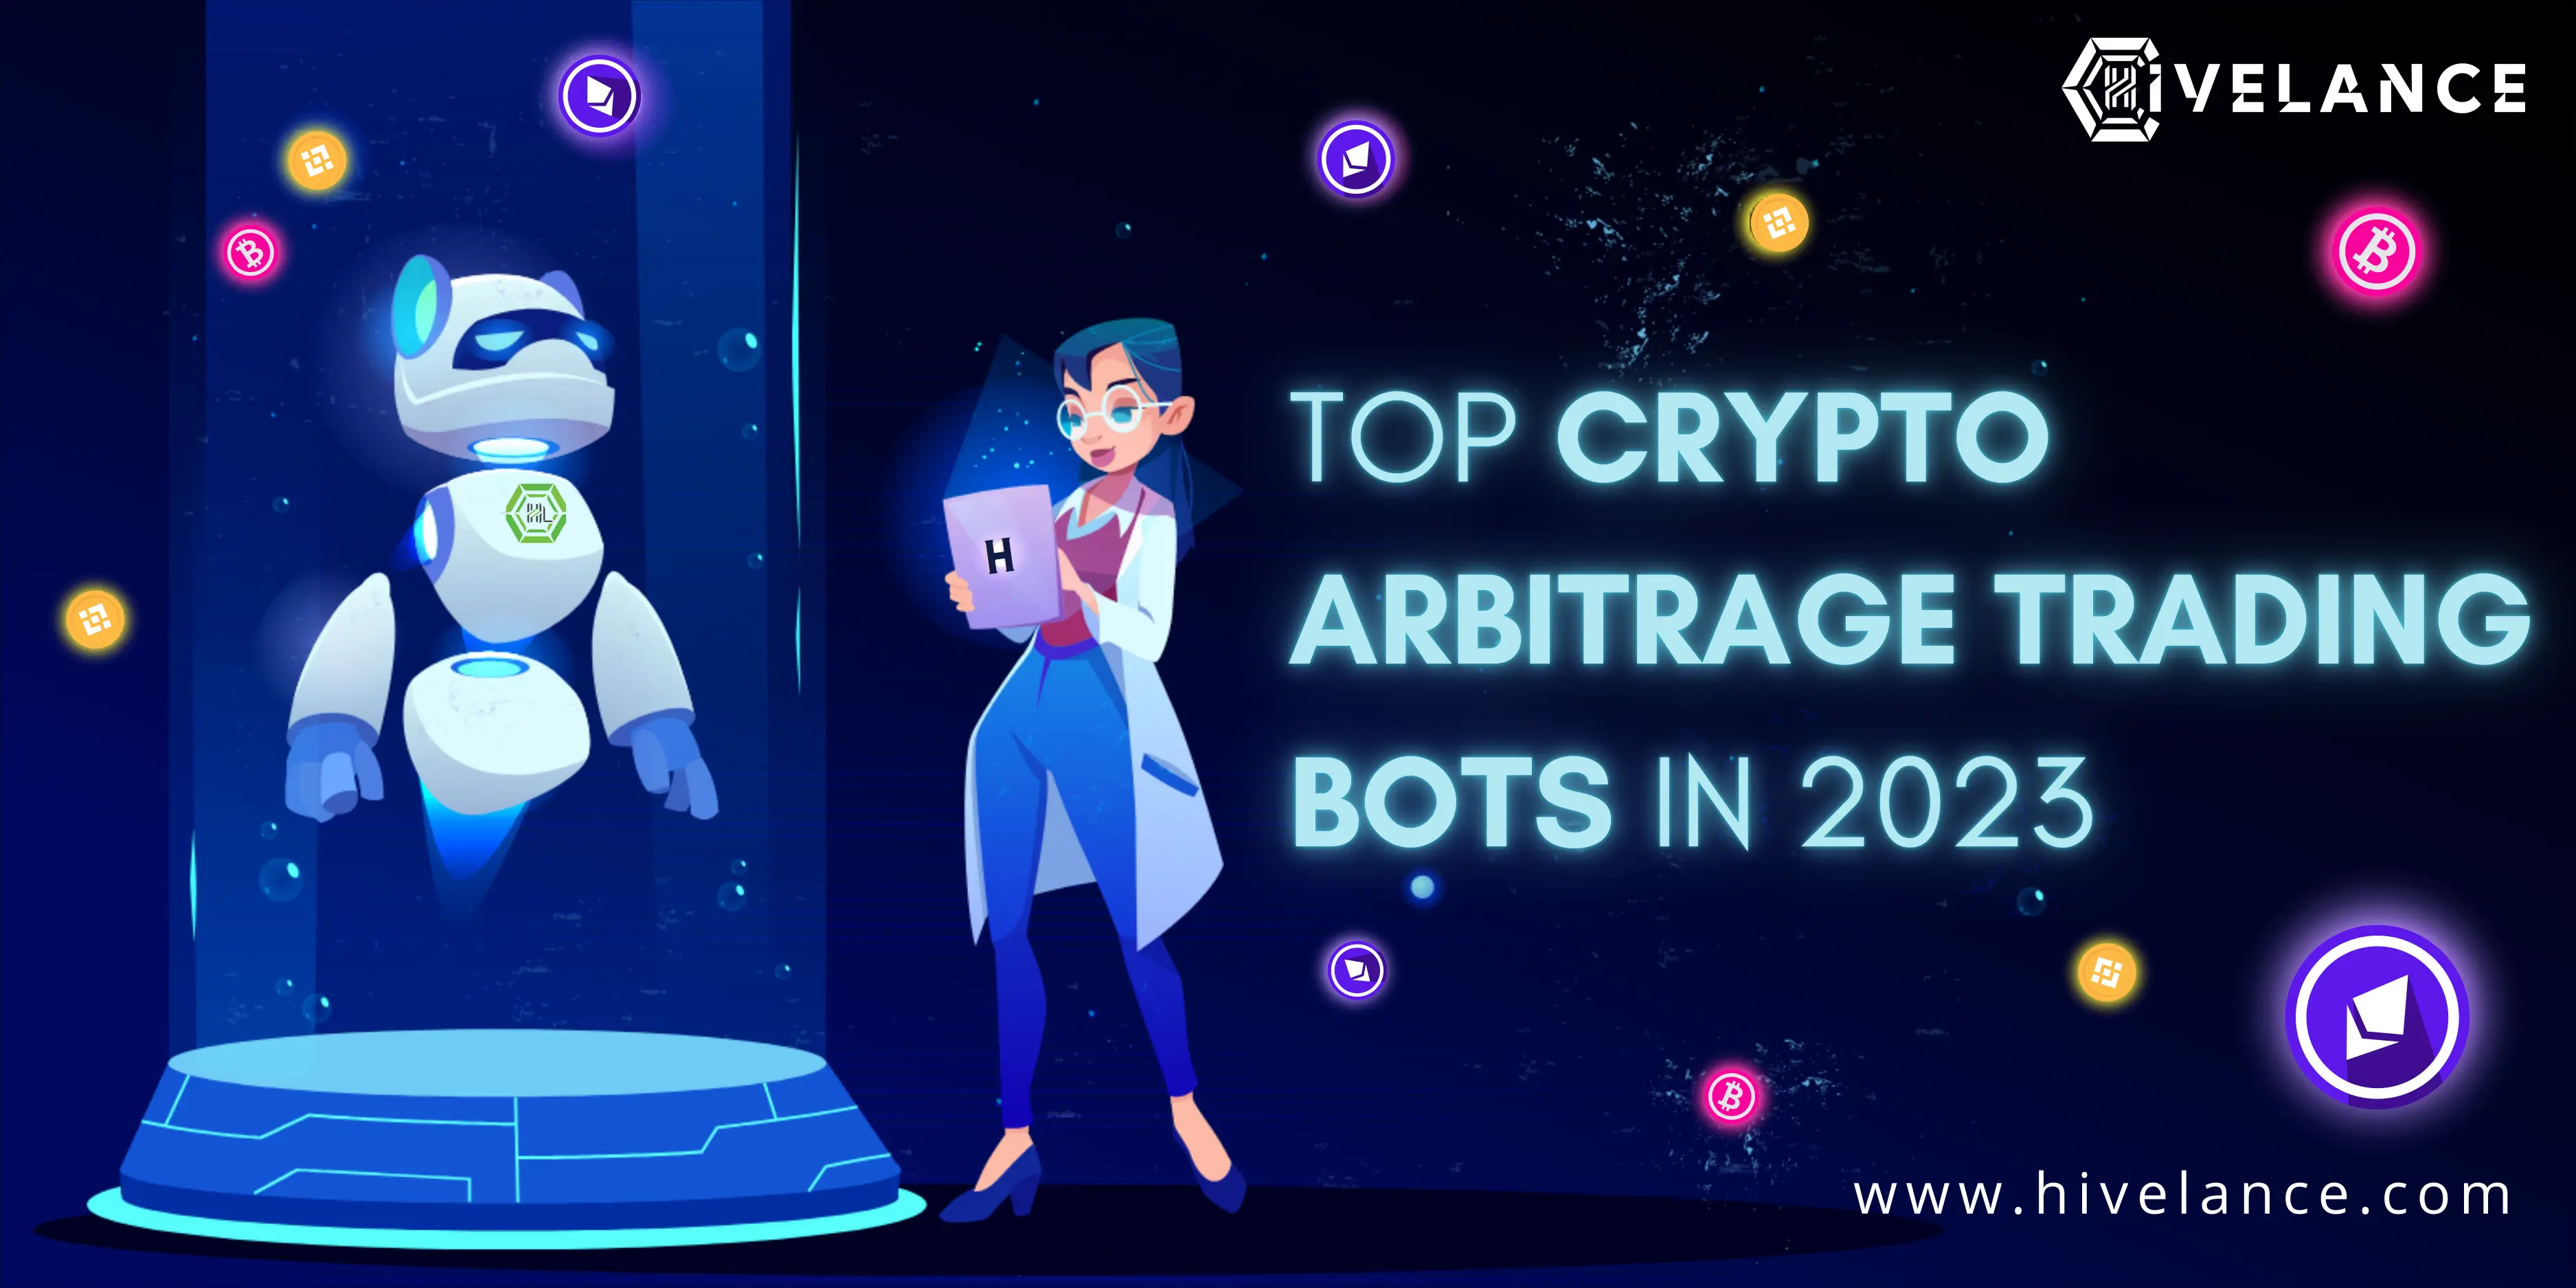 Top Crypto Arbitrage Trading Bots for 2023